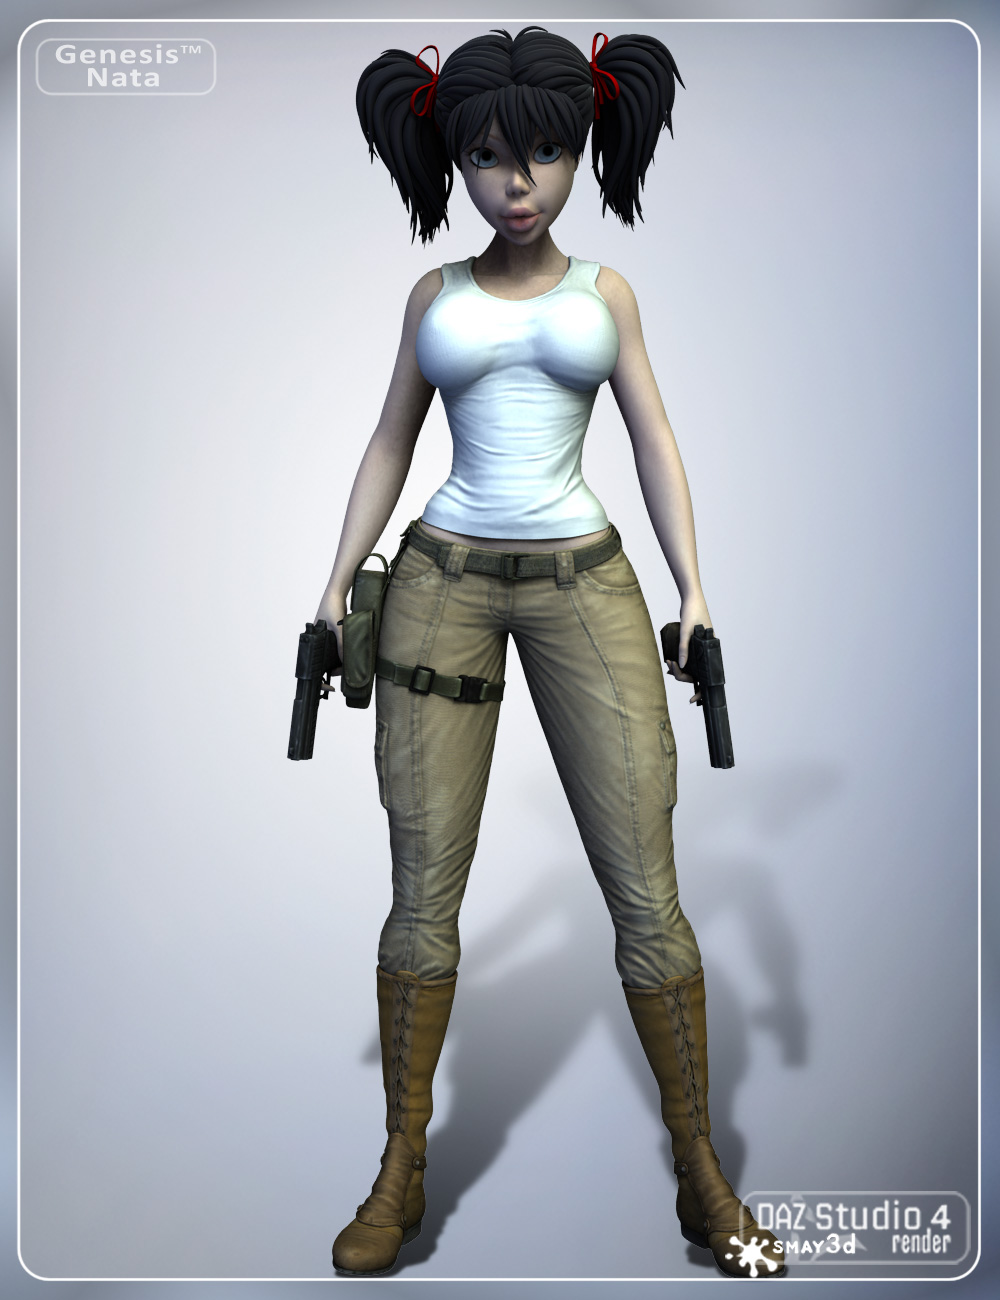 Stalker Girl Guns for Genesis by: smay, 3D Models by Daz 3D